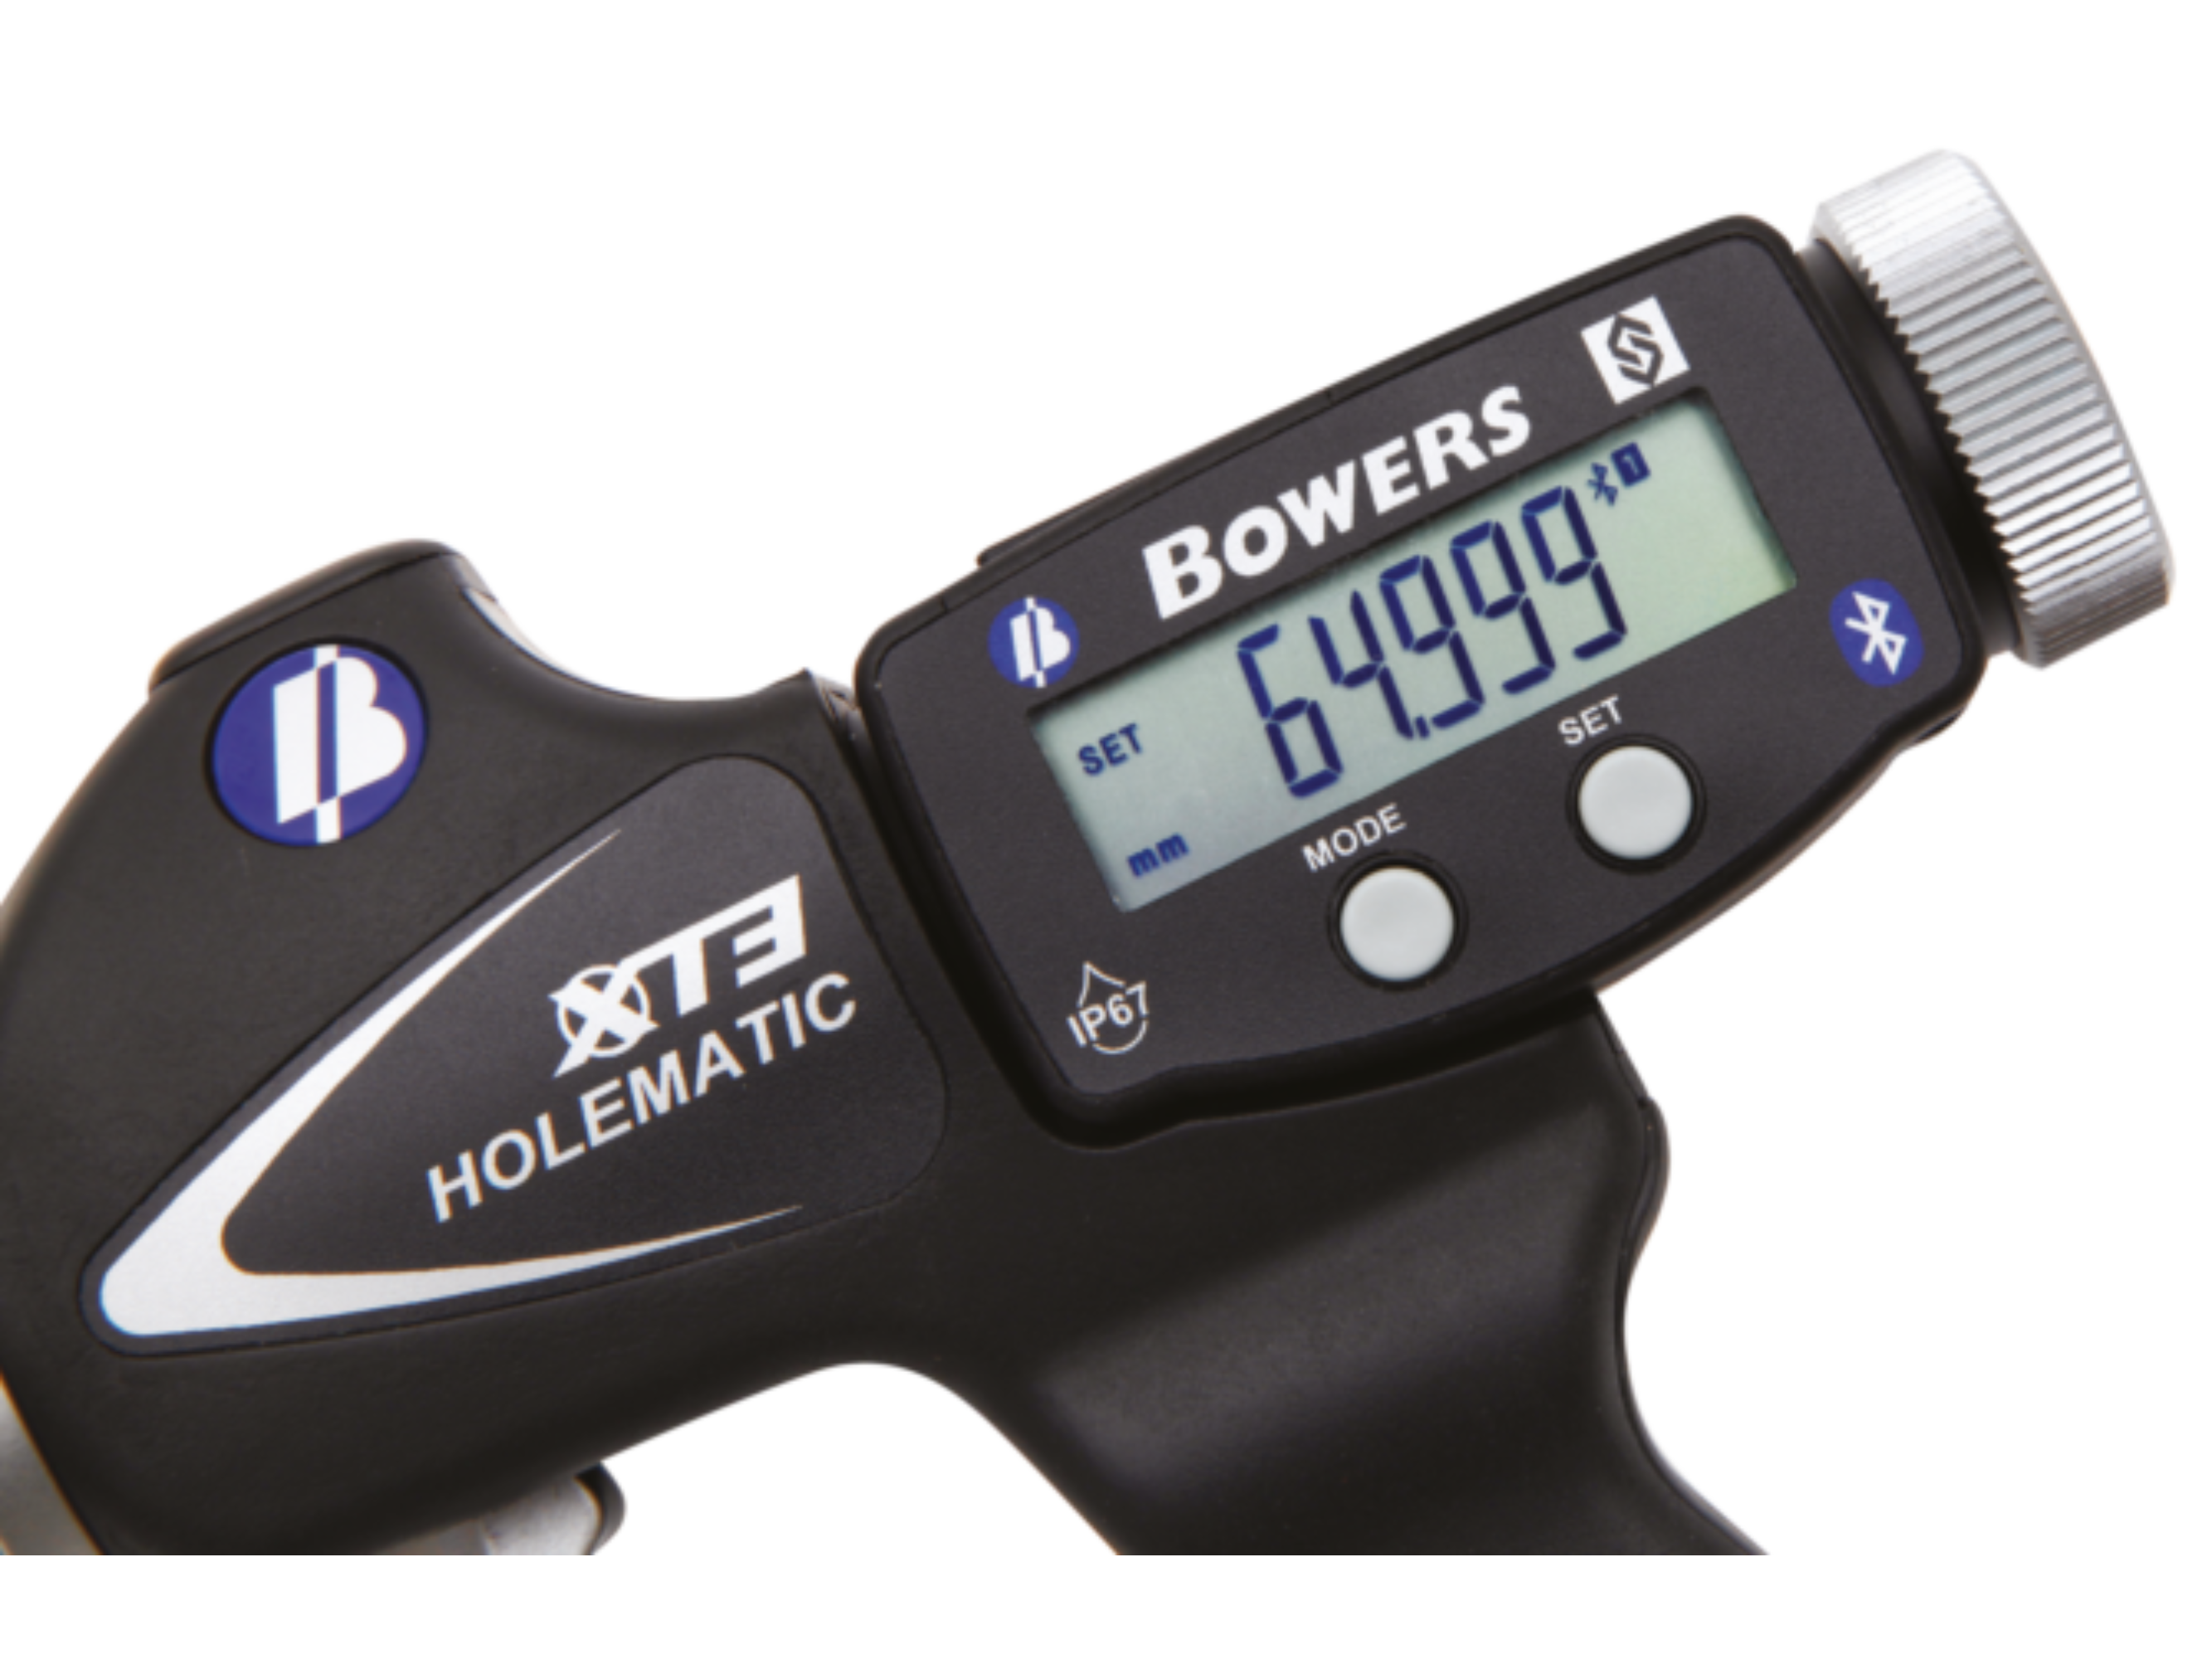 Bowers XT3-BT Holematic Digital Pistol Grip Bore Gauge With Bluetooth